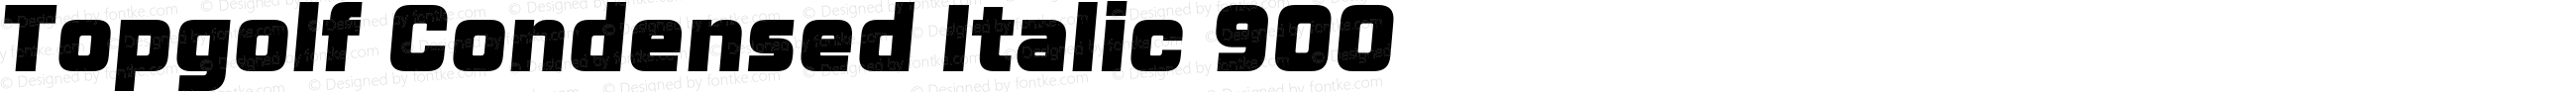 Topgolf Condensed Italic 900